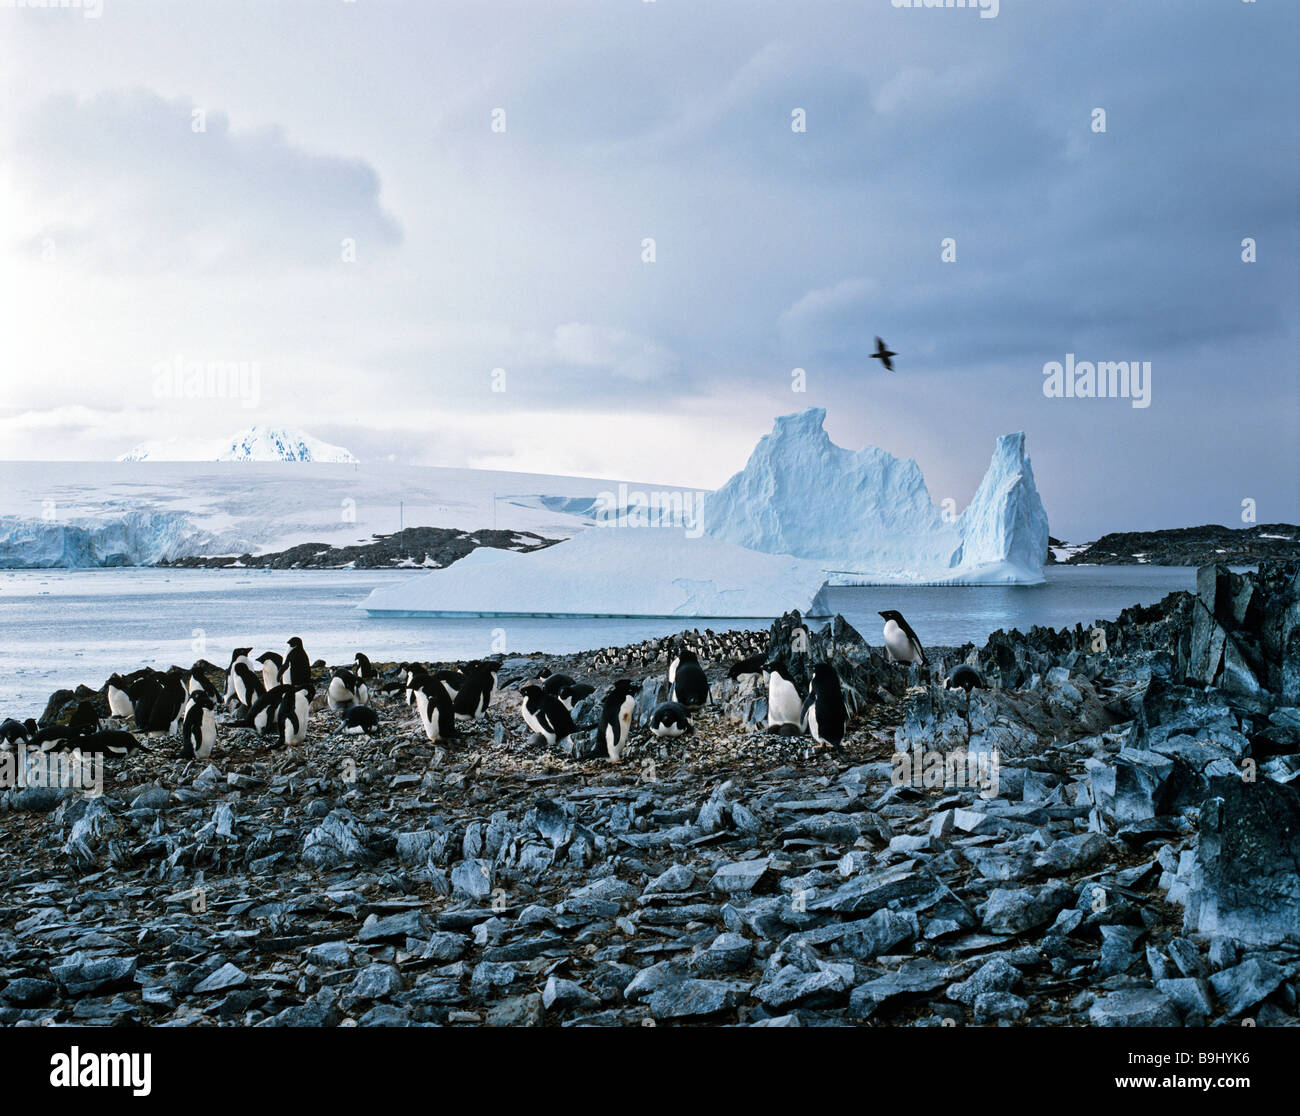 Los pingüinos Adelia (Pygoscelis adeliae), Mar polar, icebergs, témpanos de hielo, Antártida Foto de stock